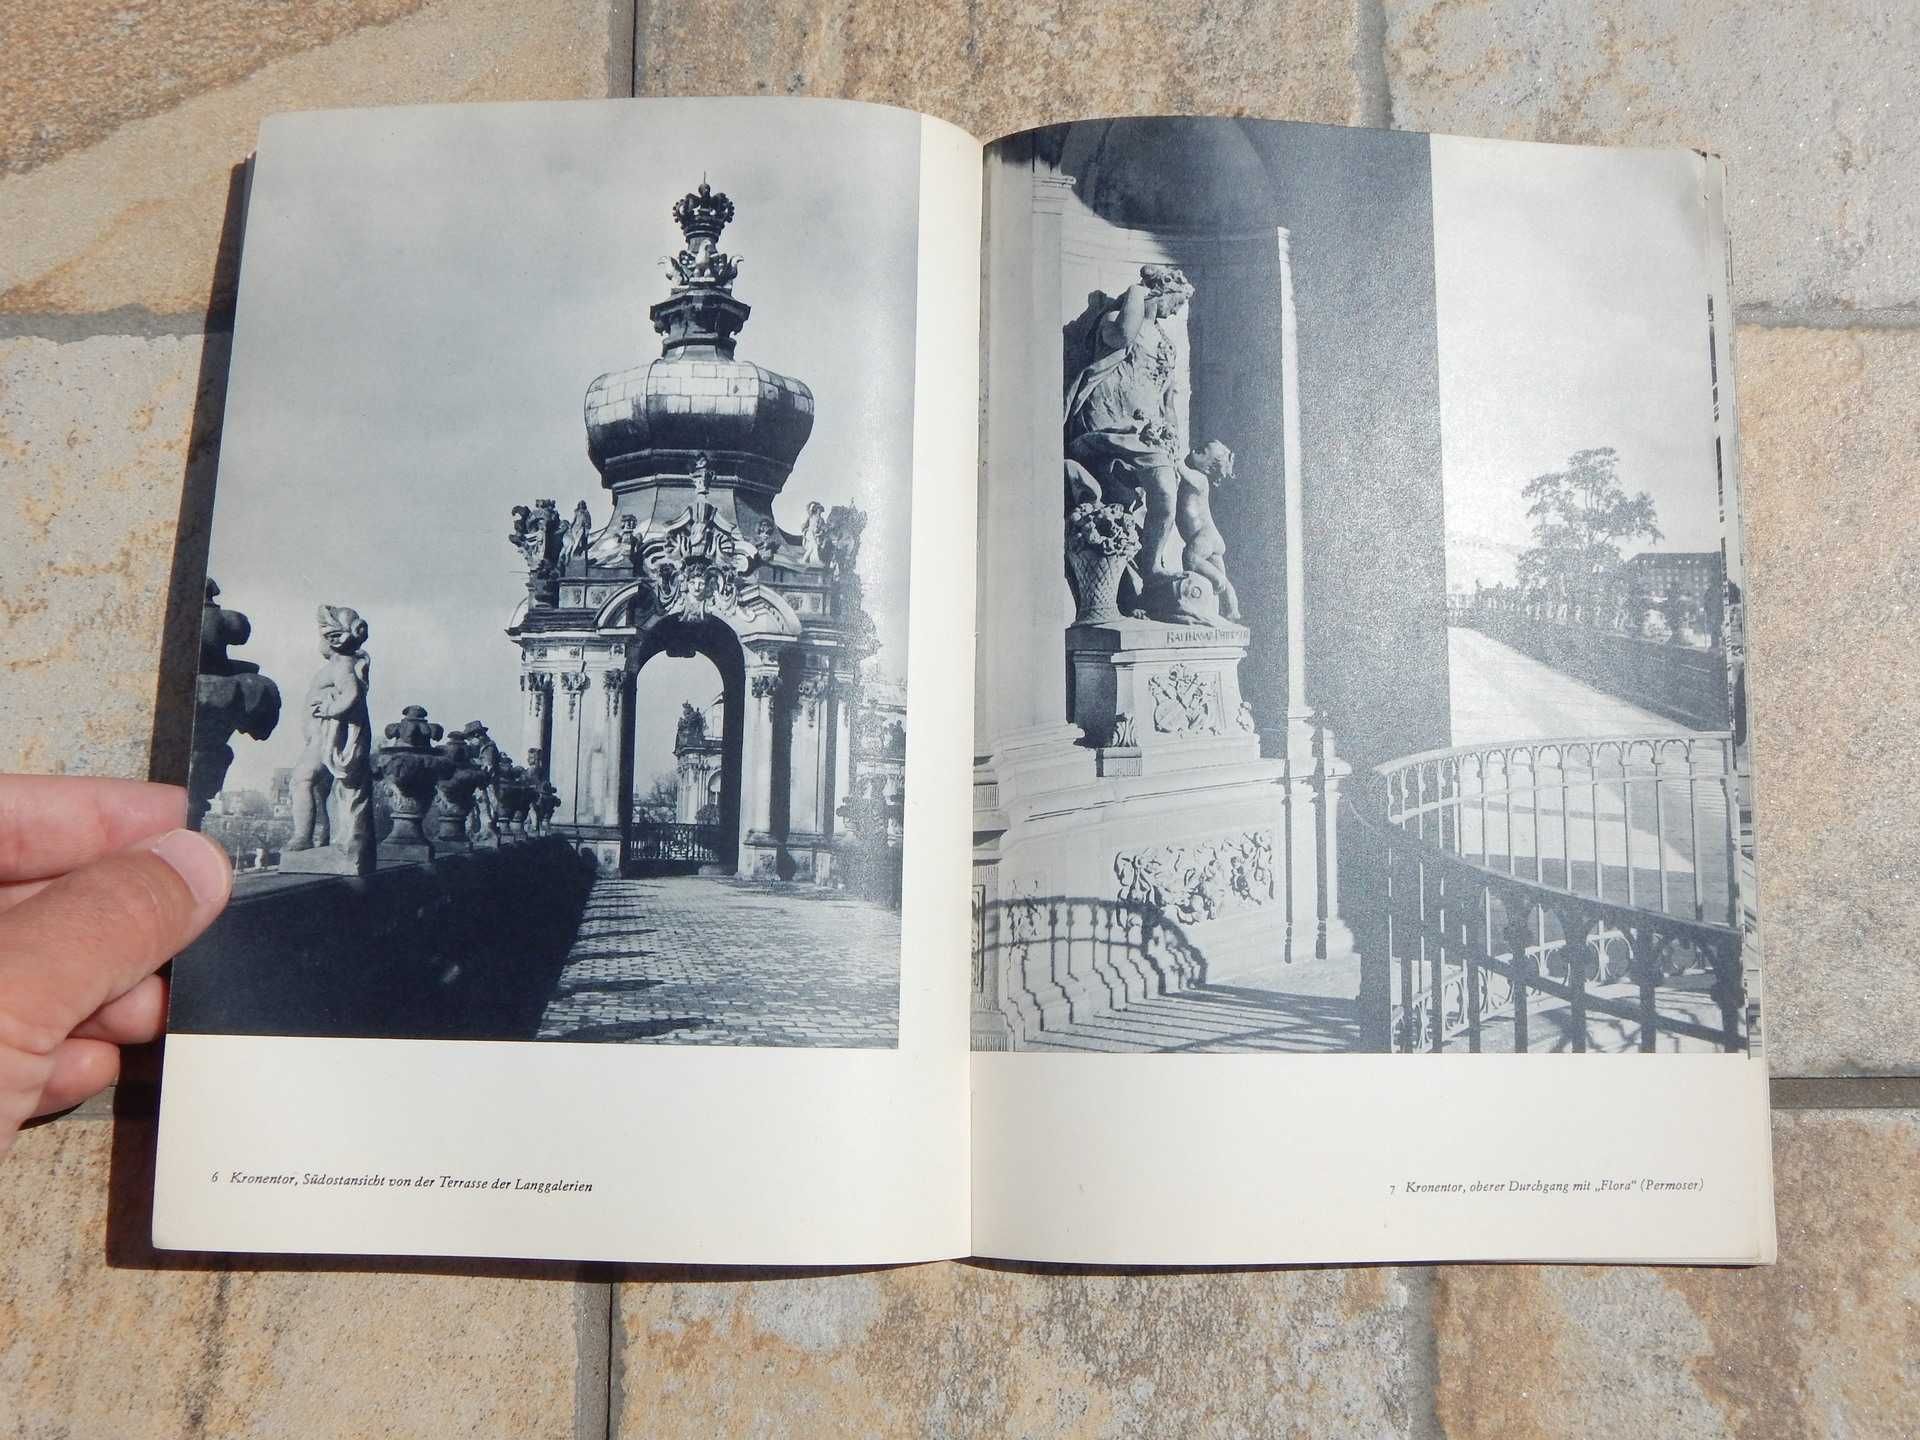 Carte prezentare Palatul Der Zwinger Dresda limba germana 1966